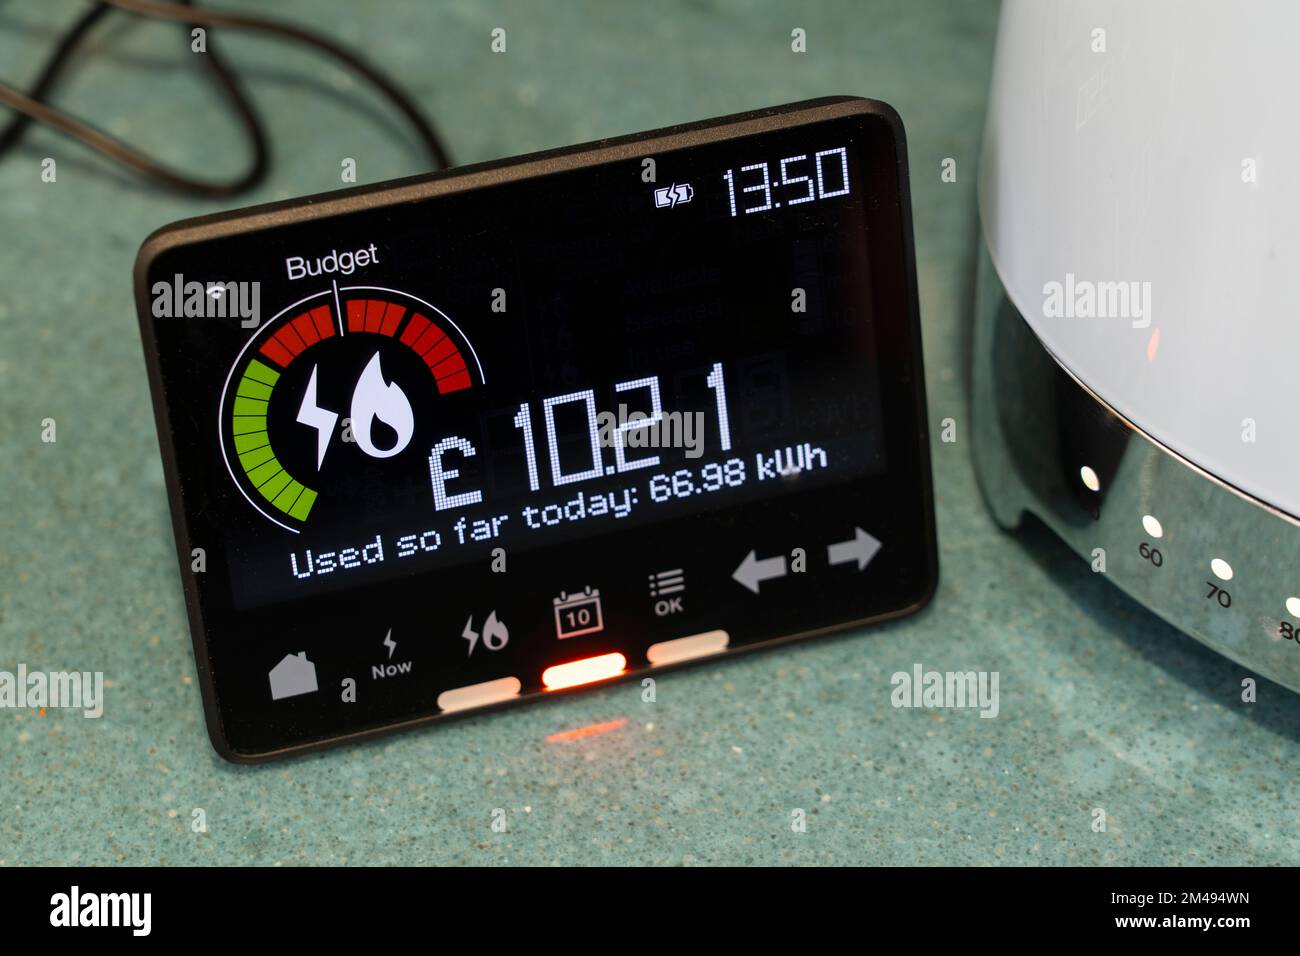 Smart energy meter showing energy usage in kilowatt hours (kWh). Theme: cost of living, rising energy bills, living standards, energy usage Stock Photo